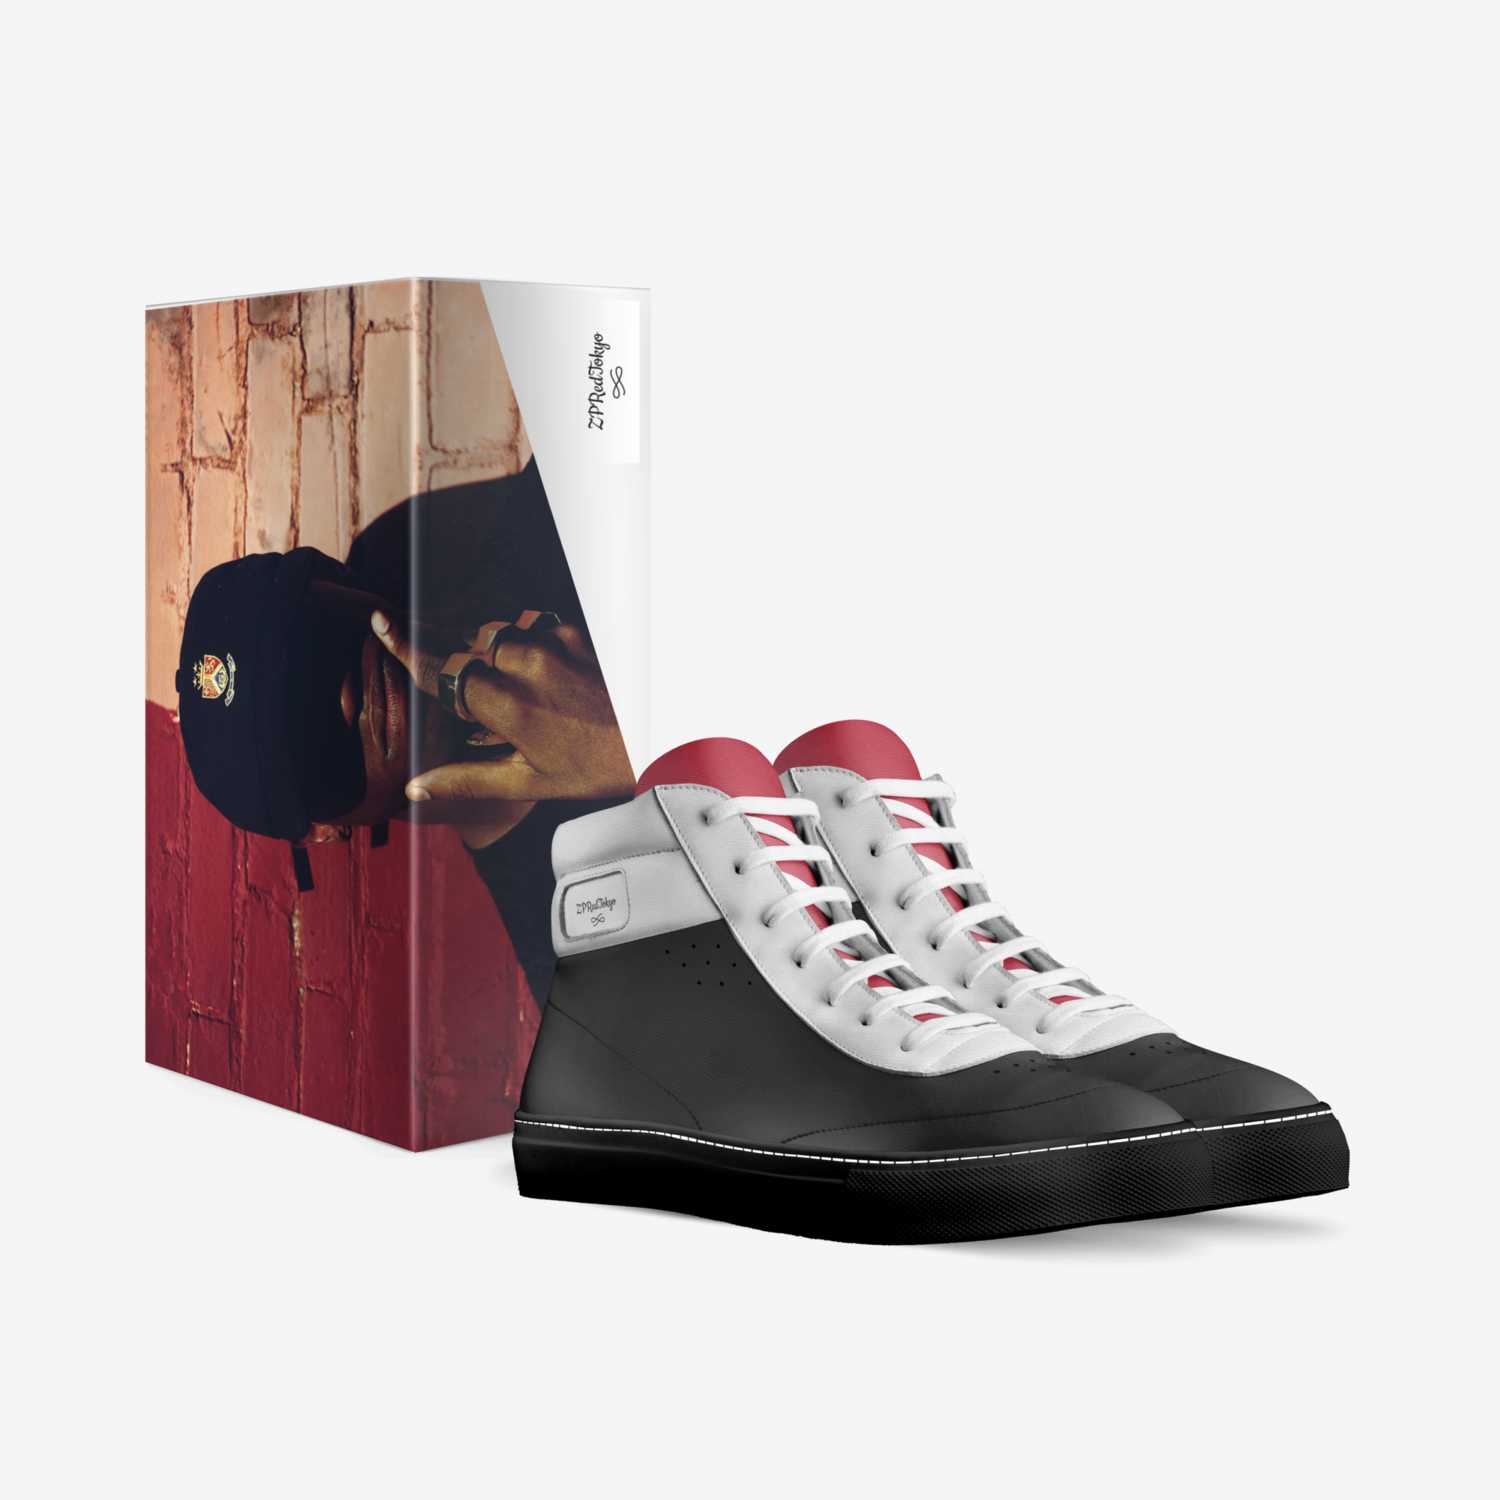 ZPRedTokyo custom made in Italy shoes by Zion Pressley | Box view